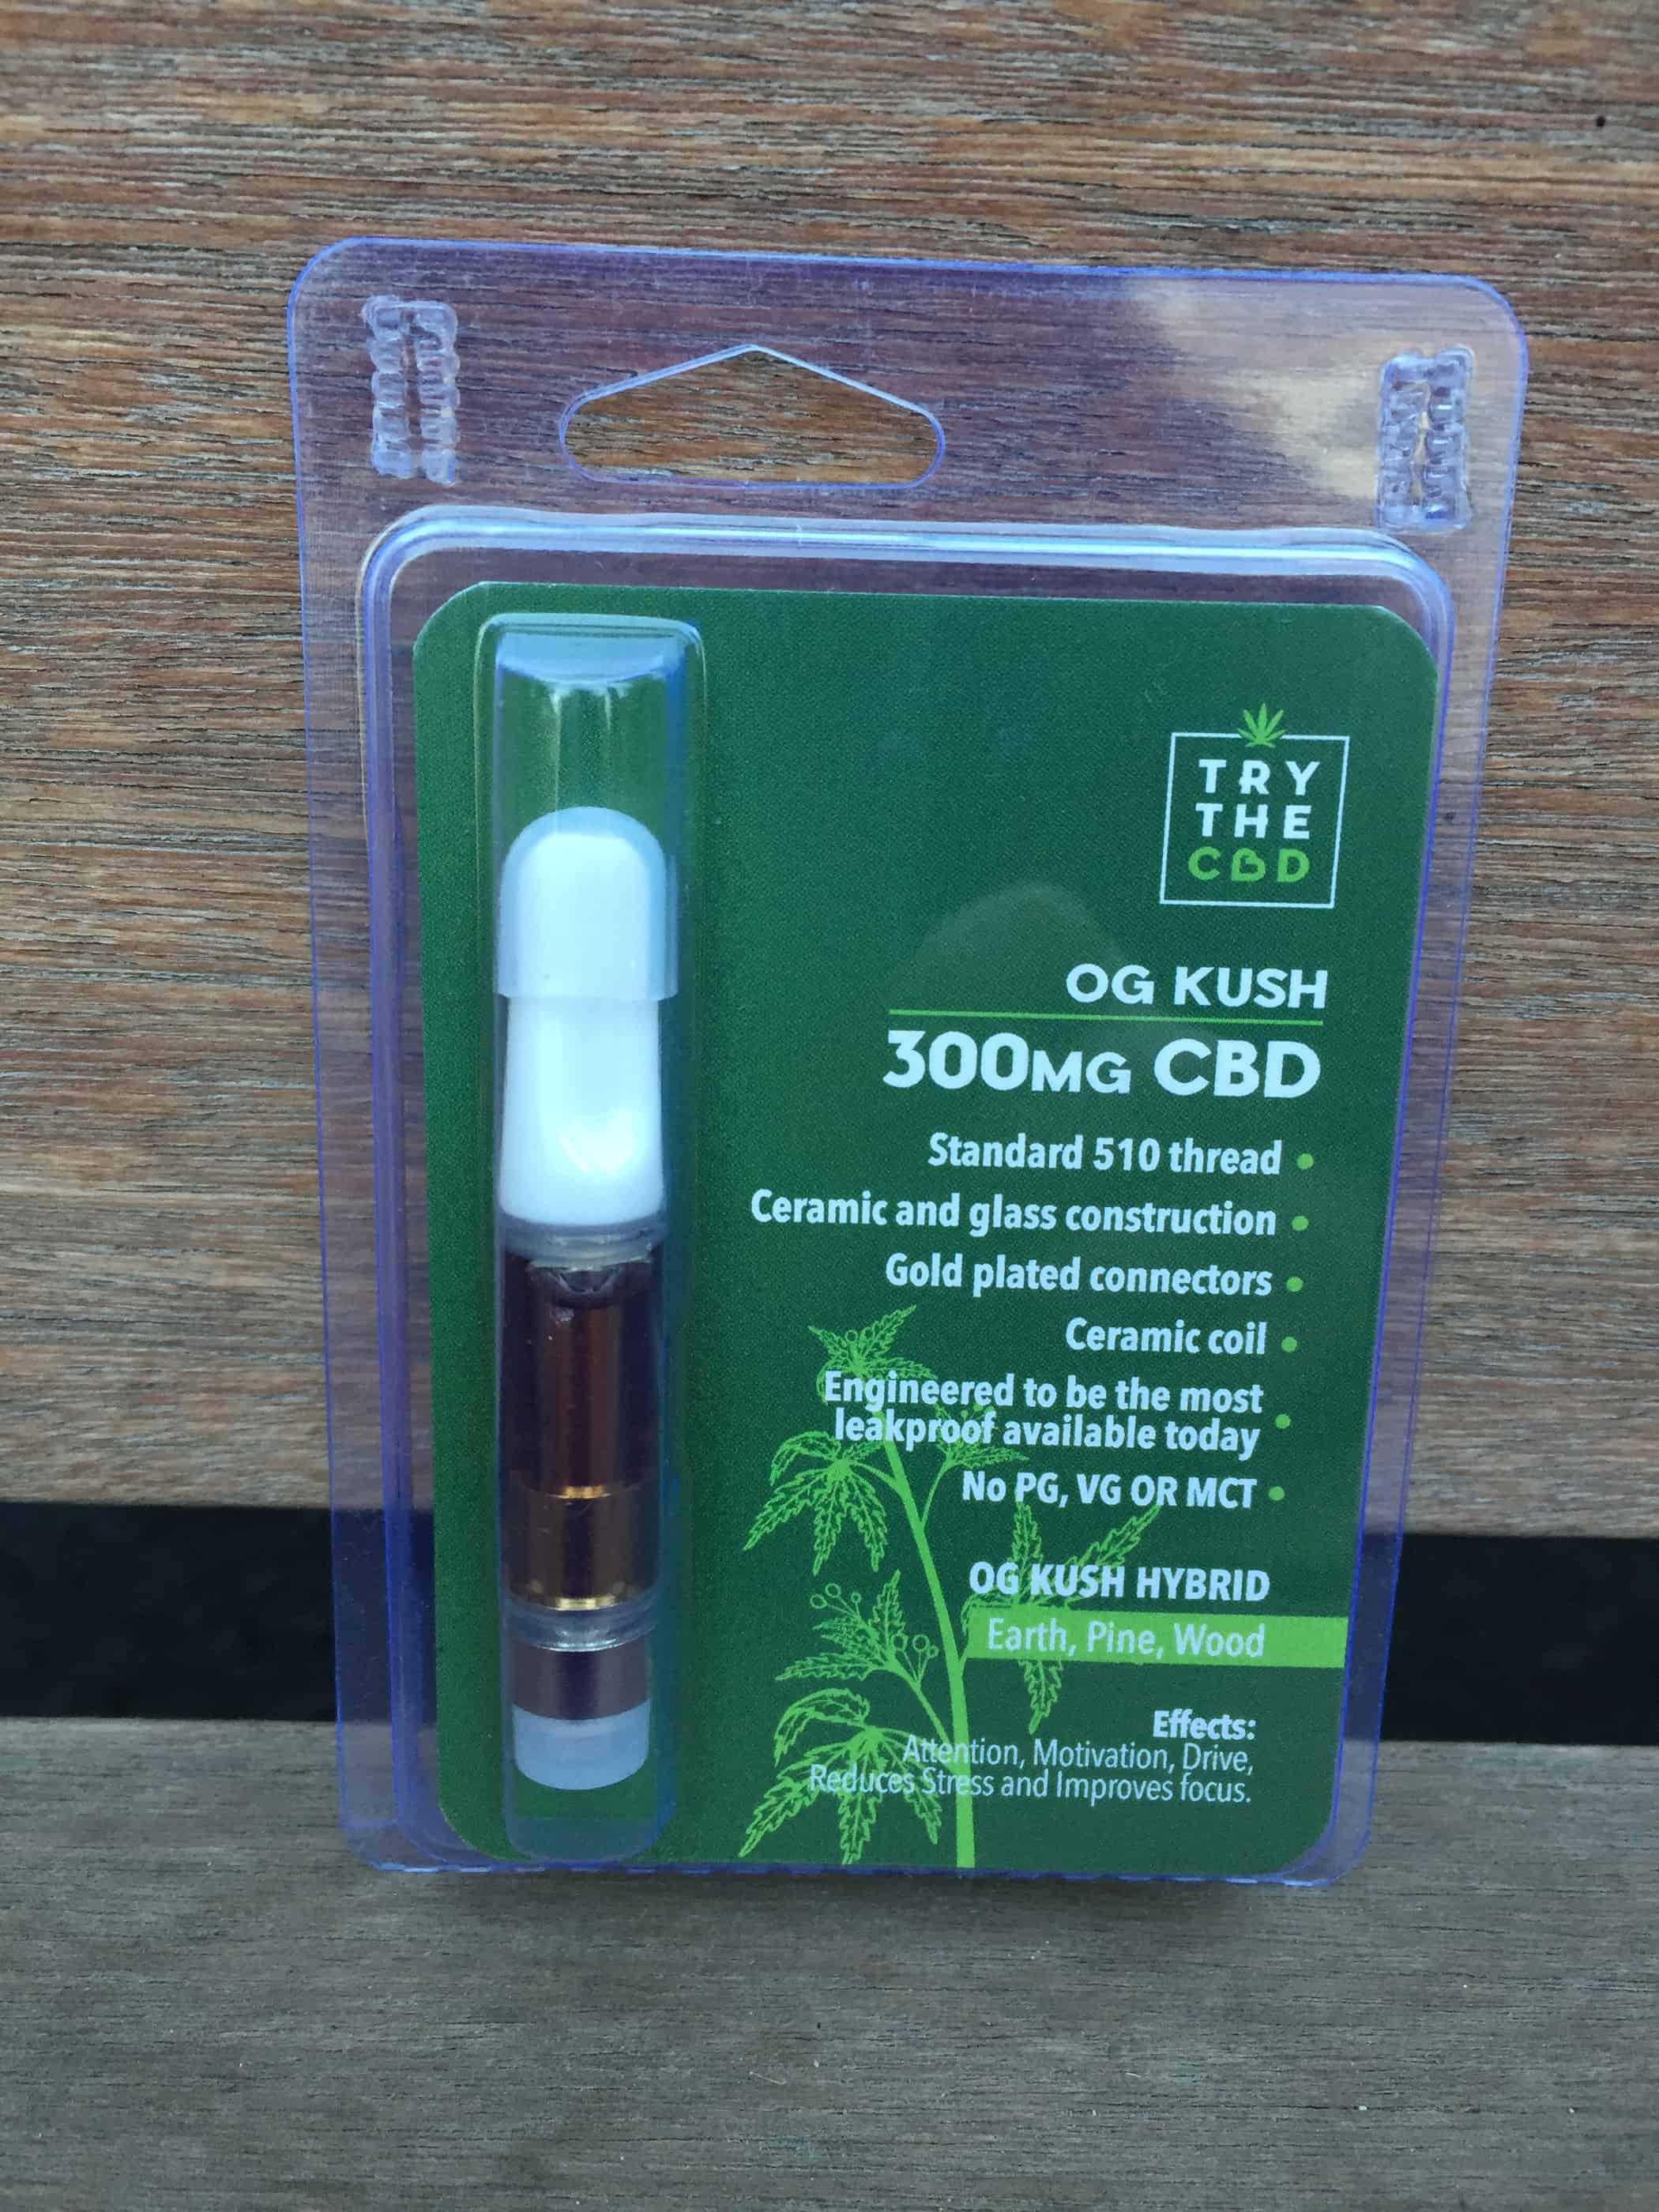 trythecbd og kush cbd vaporizer pen cartridge 300 mg review save on cannabis review